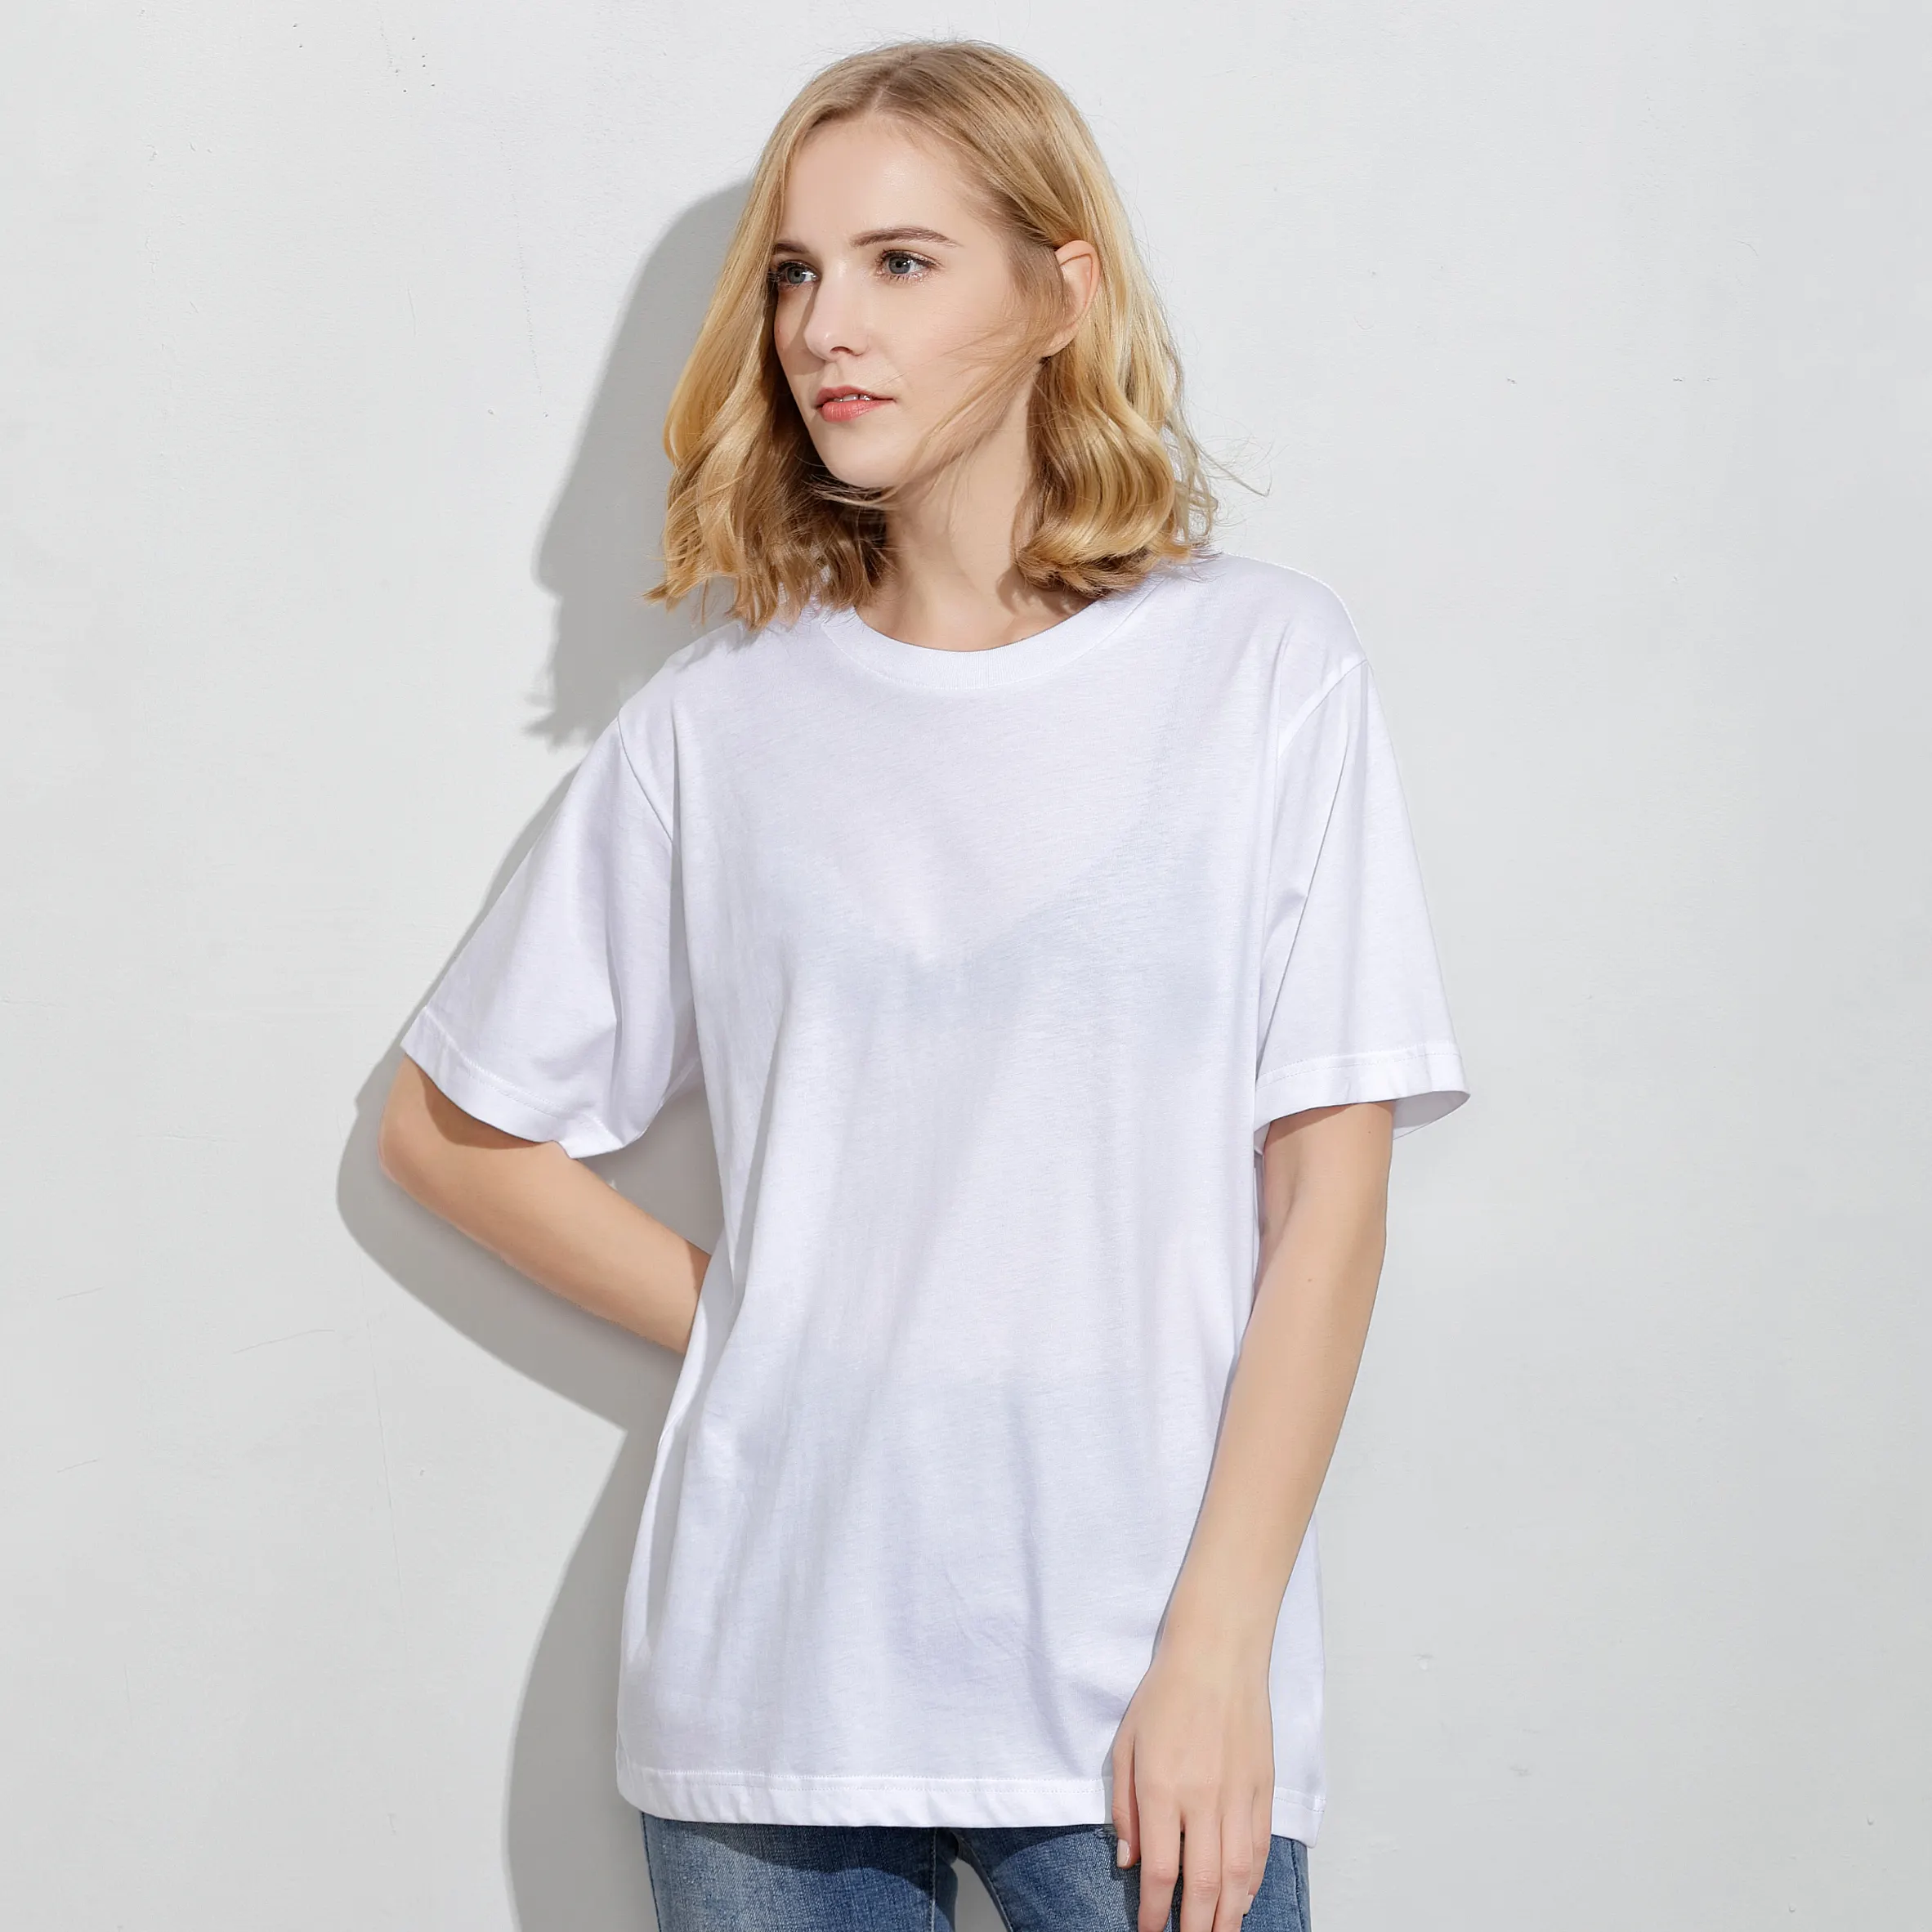 BSCI Sustainable Fabric Clothing Manufacturers Bamboo Cotton Oversized White Tshirts Custom Screen Print Tshirt Women Unisex